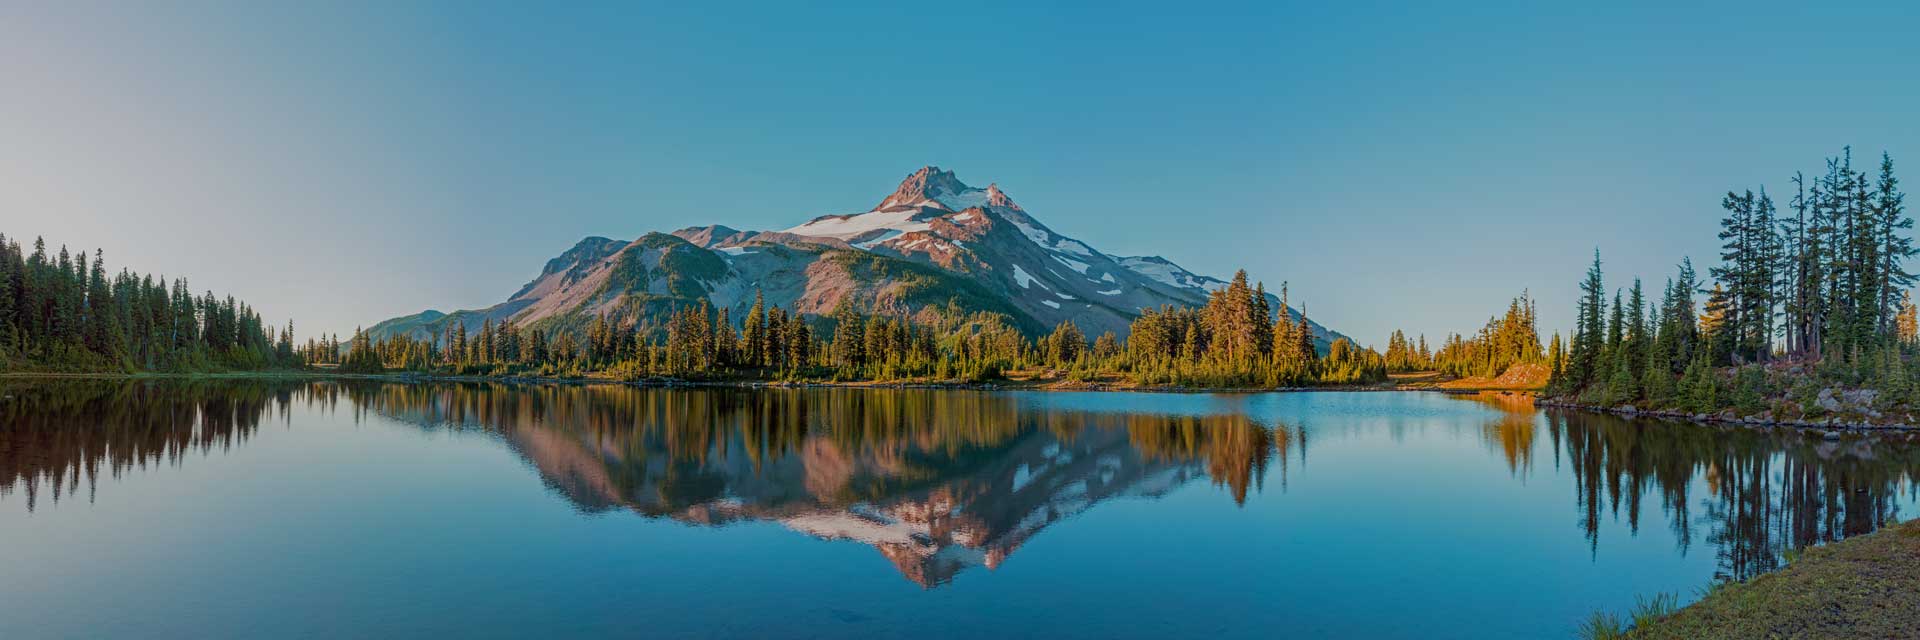 mountain_lake